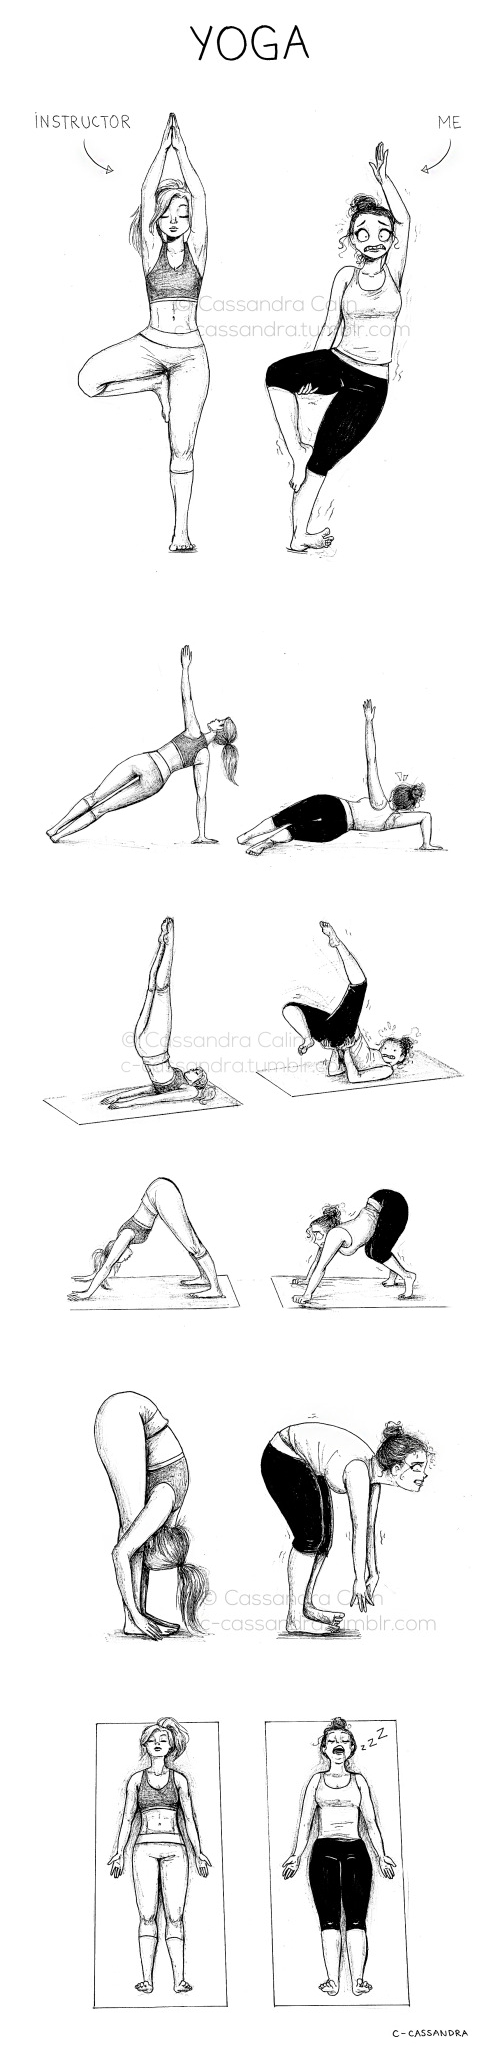 yoga-instructor-me